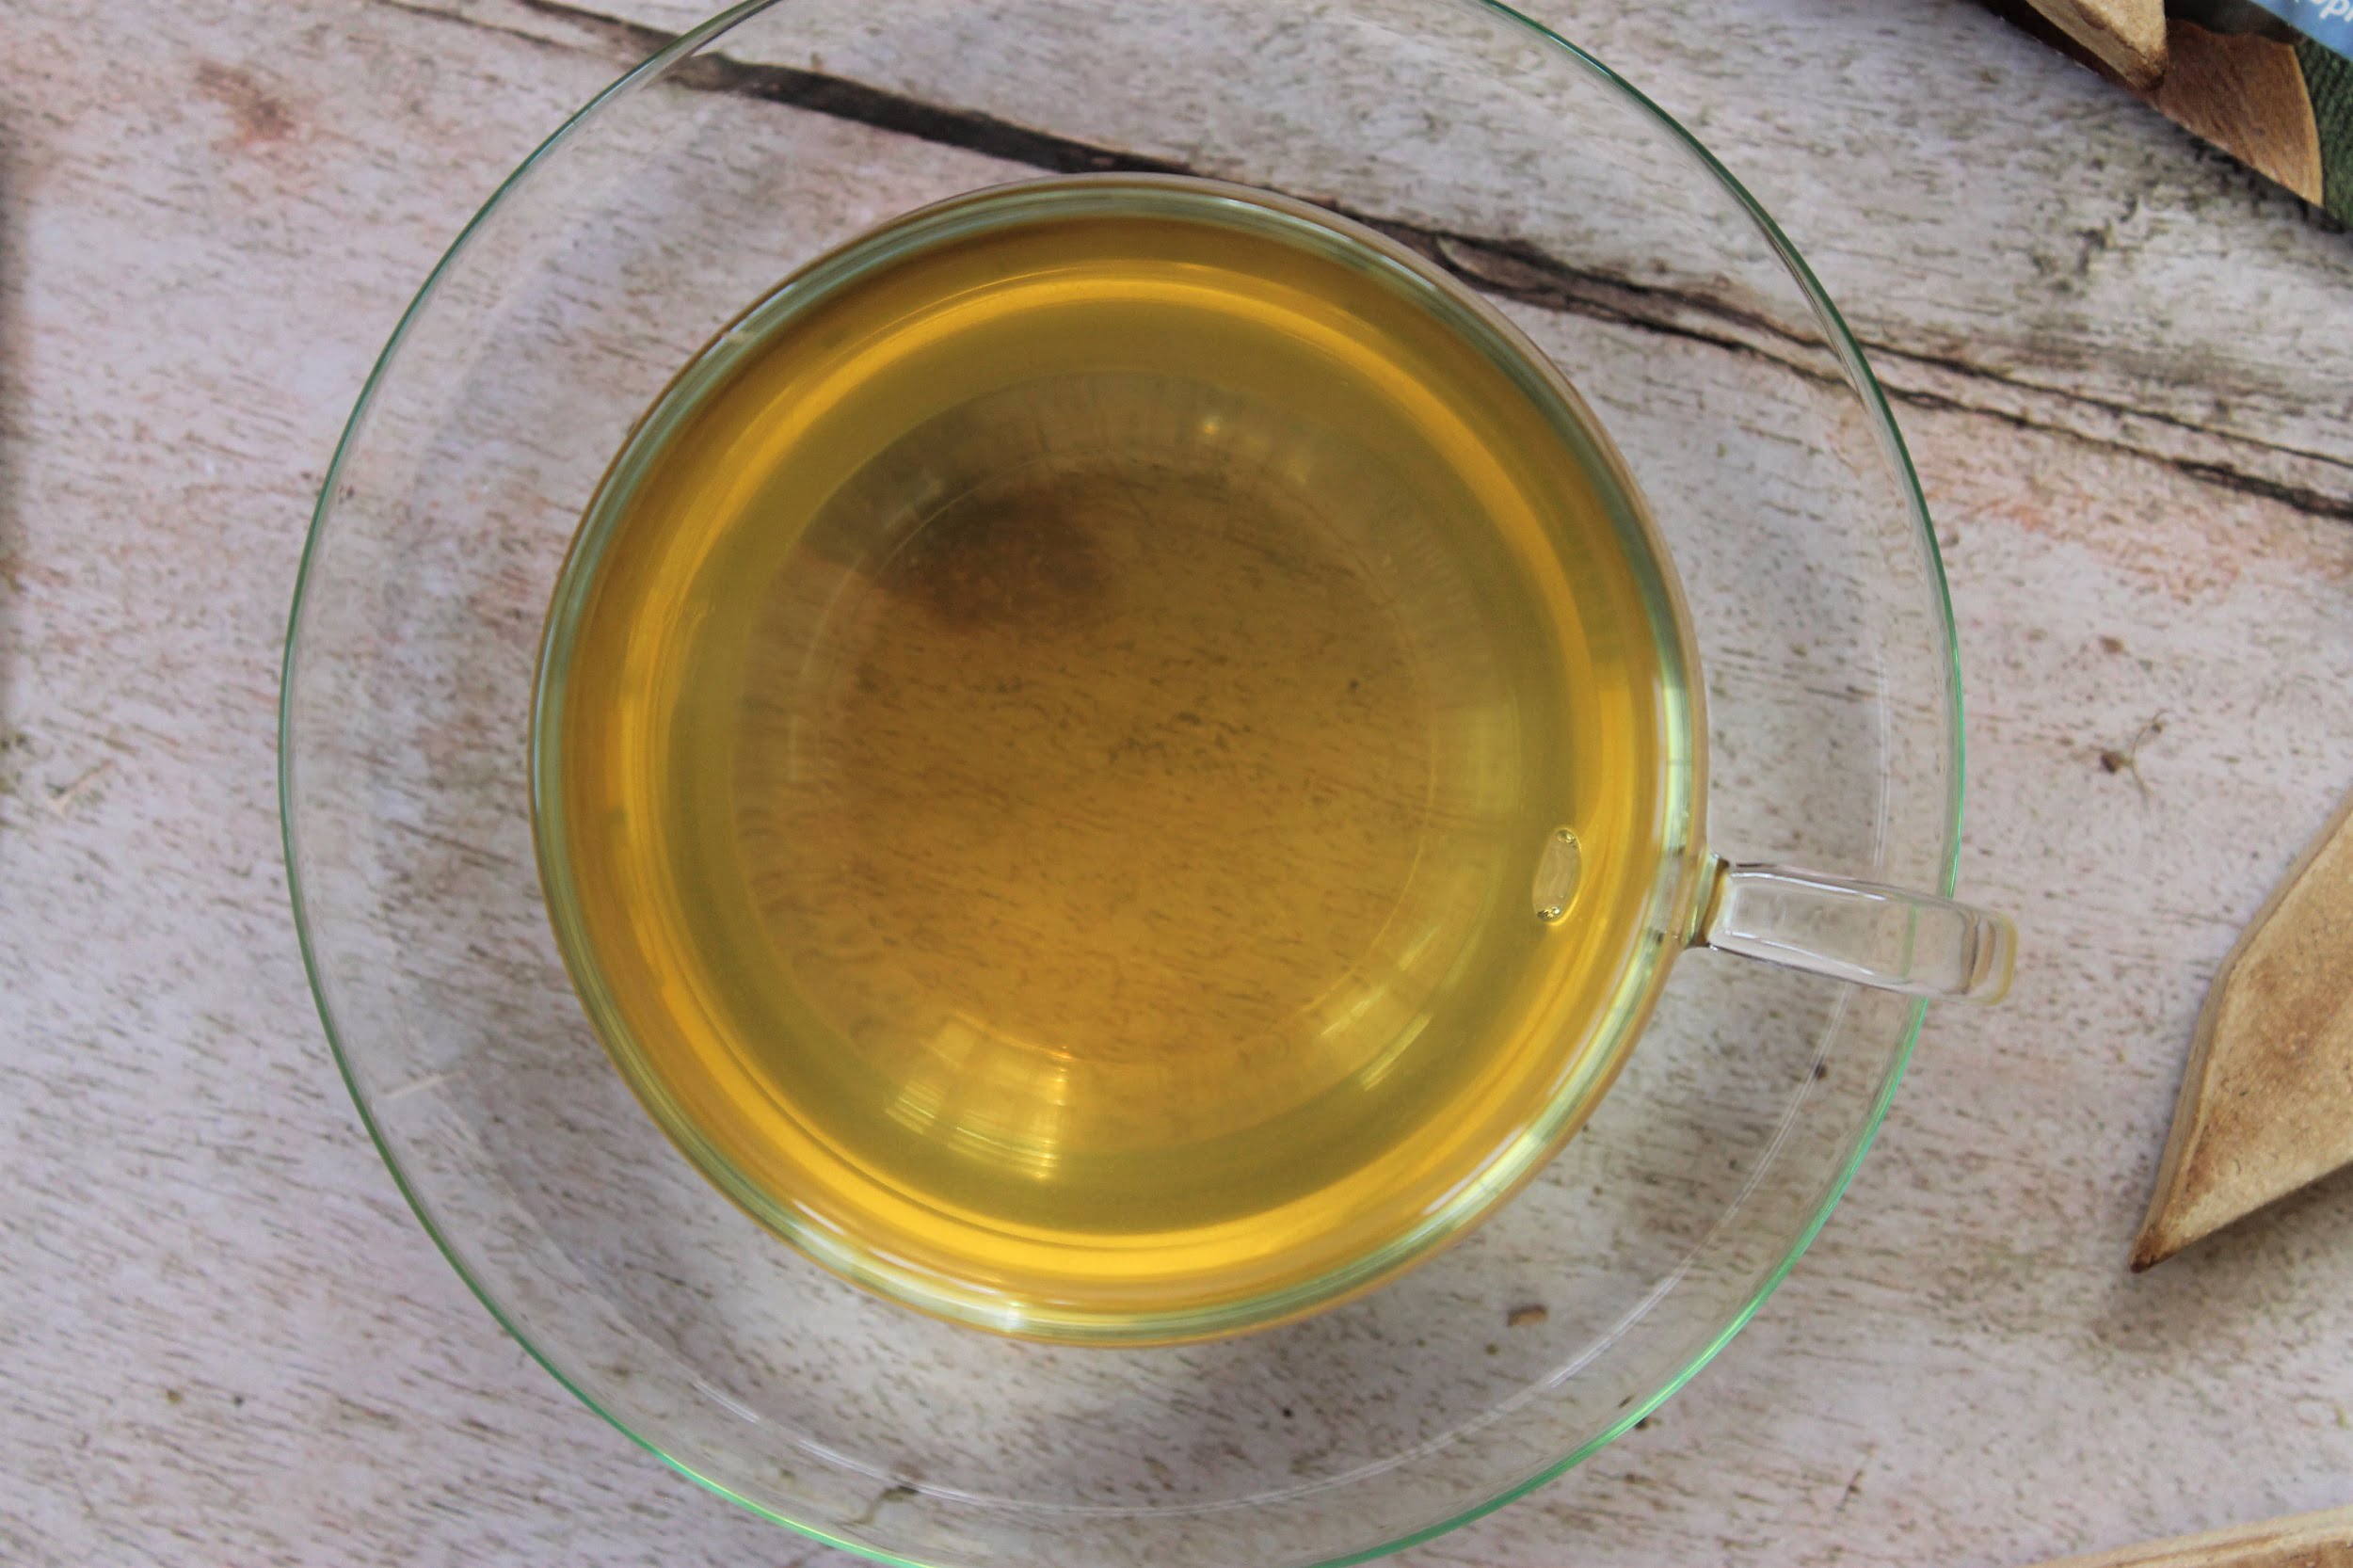 sweet green tea in glass teacup